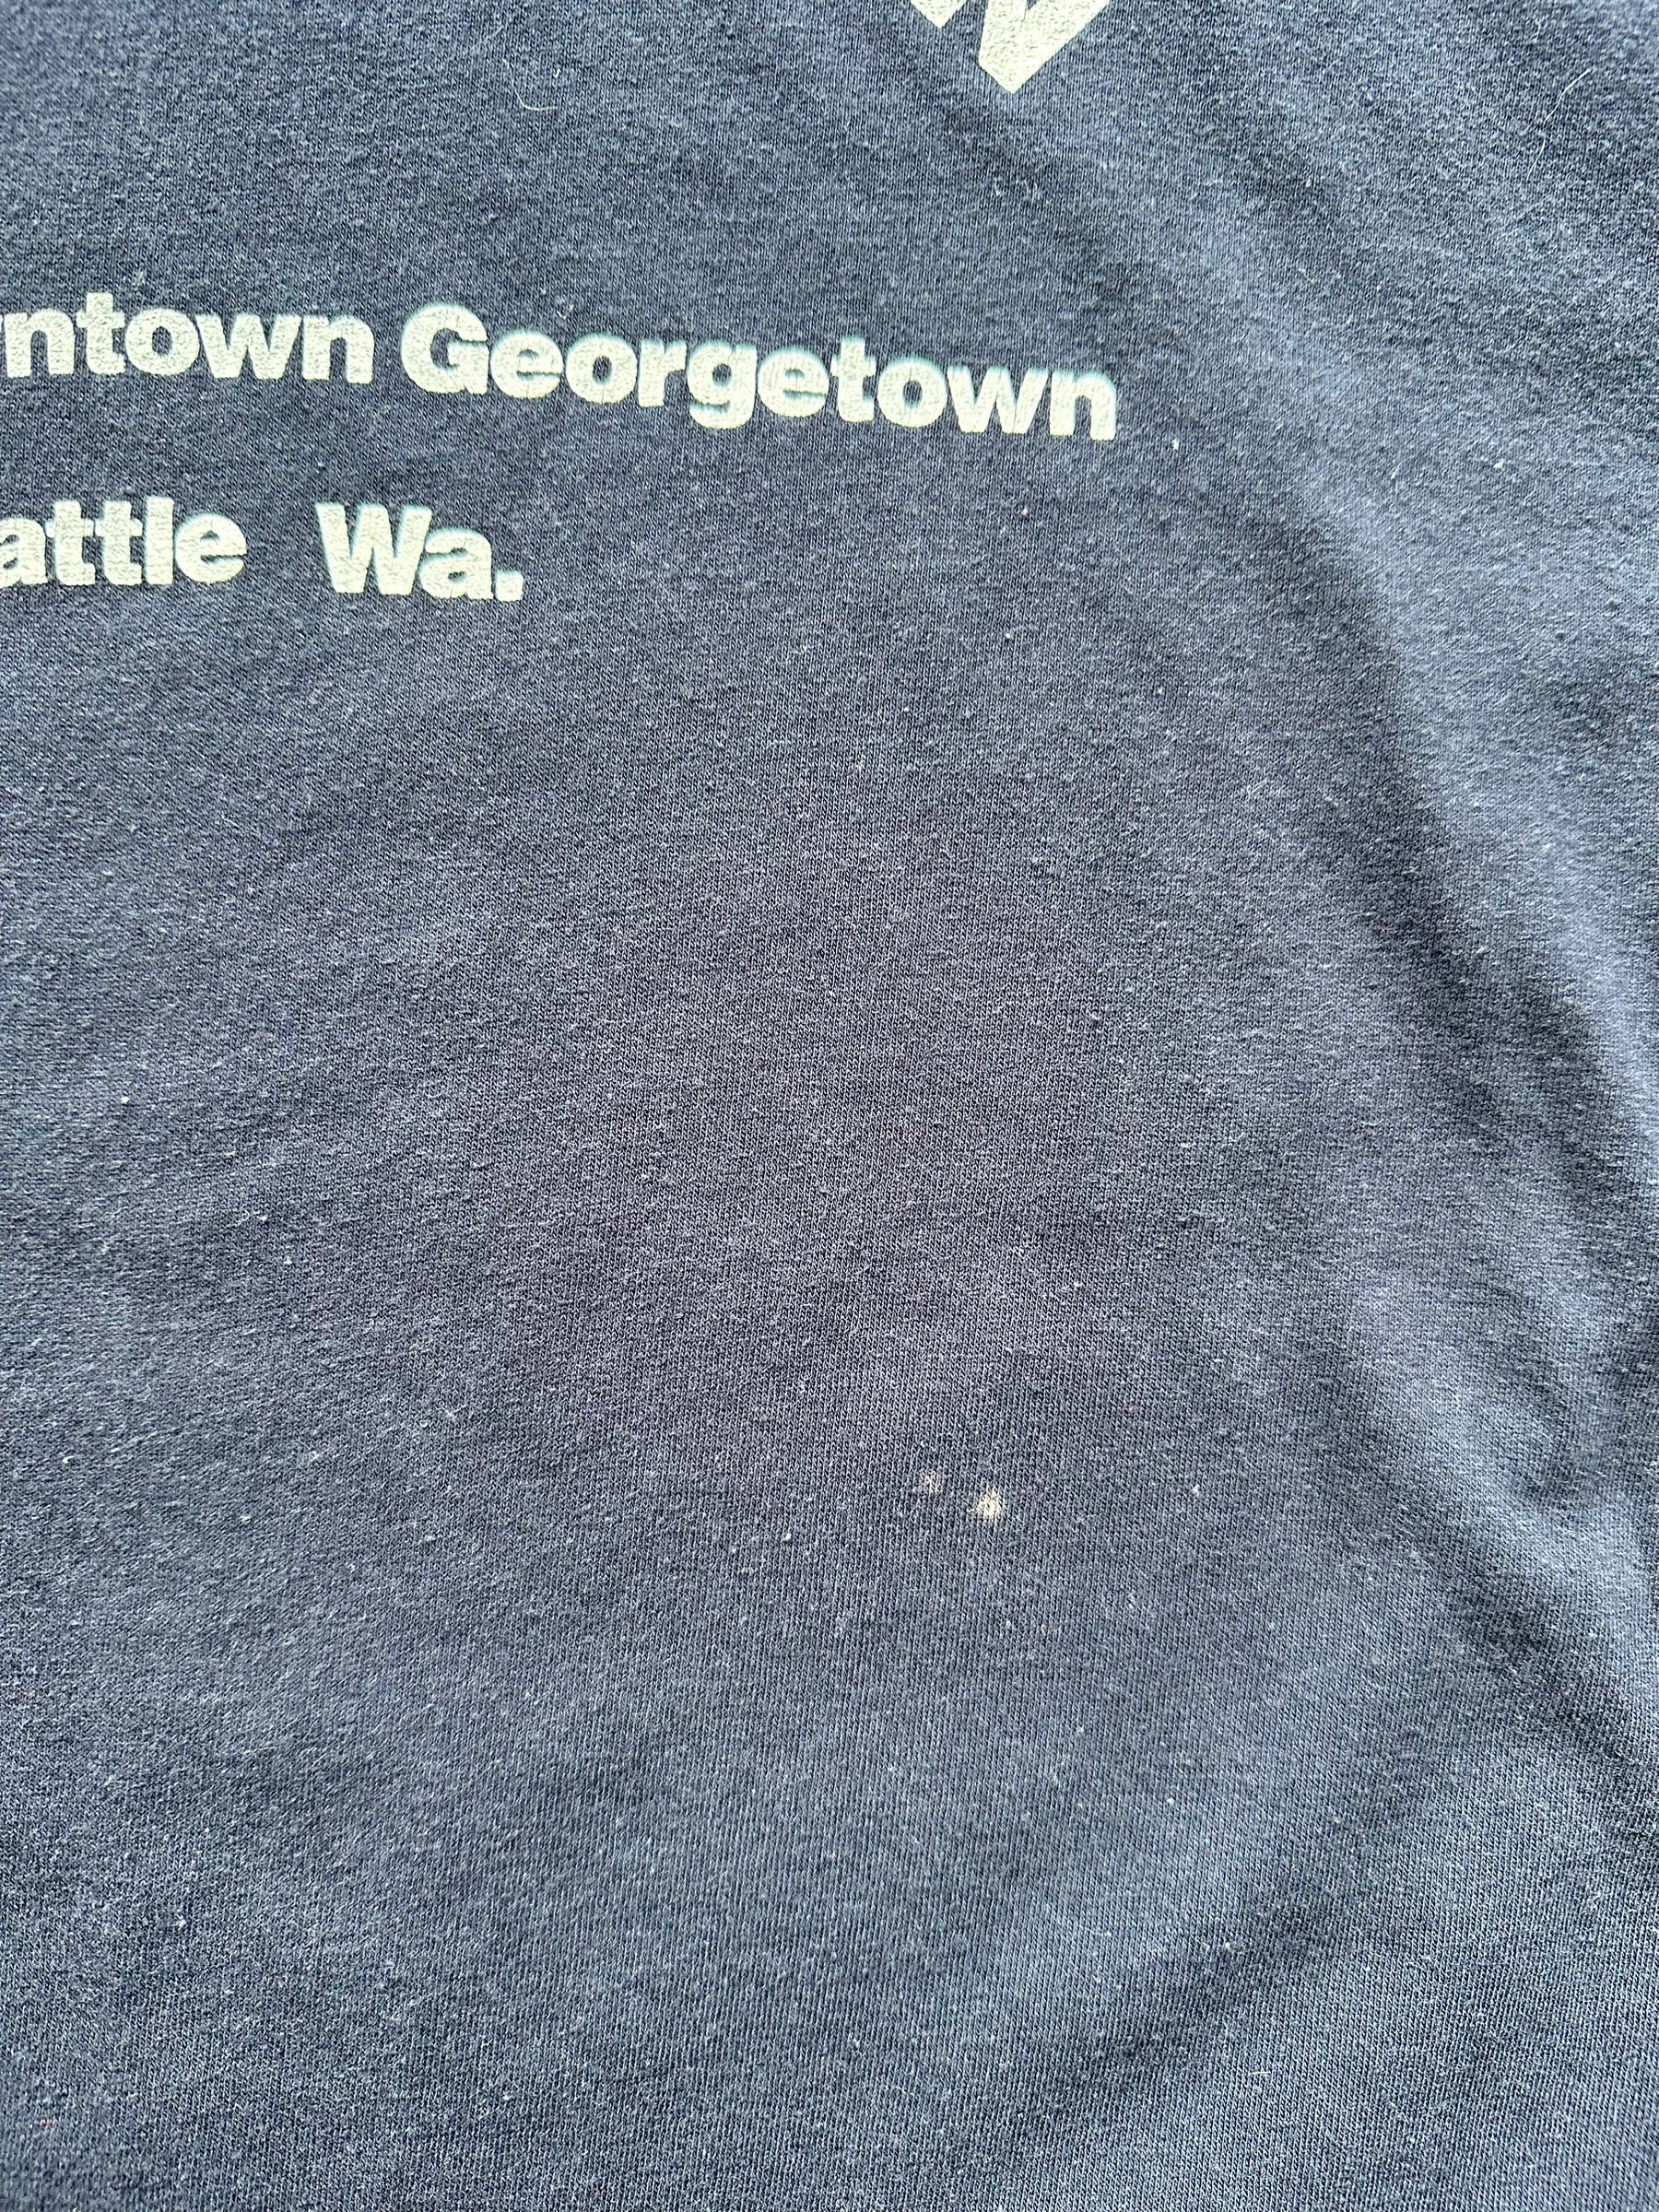 Small Blemish near Text on Vintage Happys Tavern Georgetown Tee SZ XL | Vintage Single Stitch T-Shirts Seattle | Barn Owl Vintage Tees Seattle